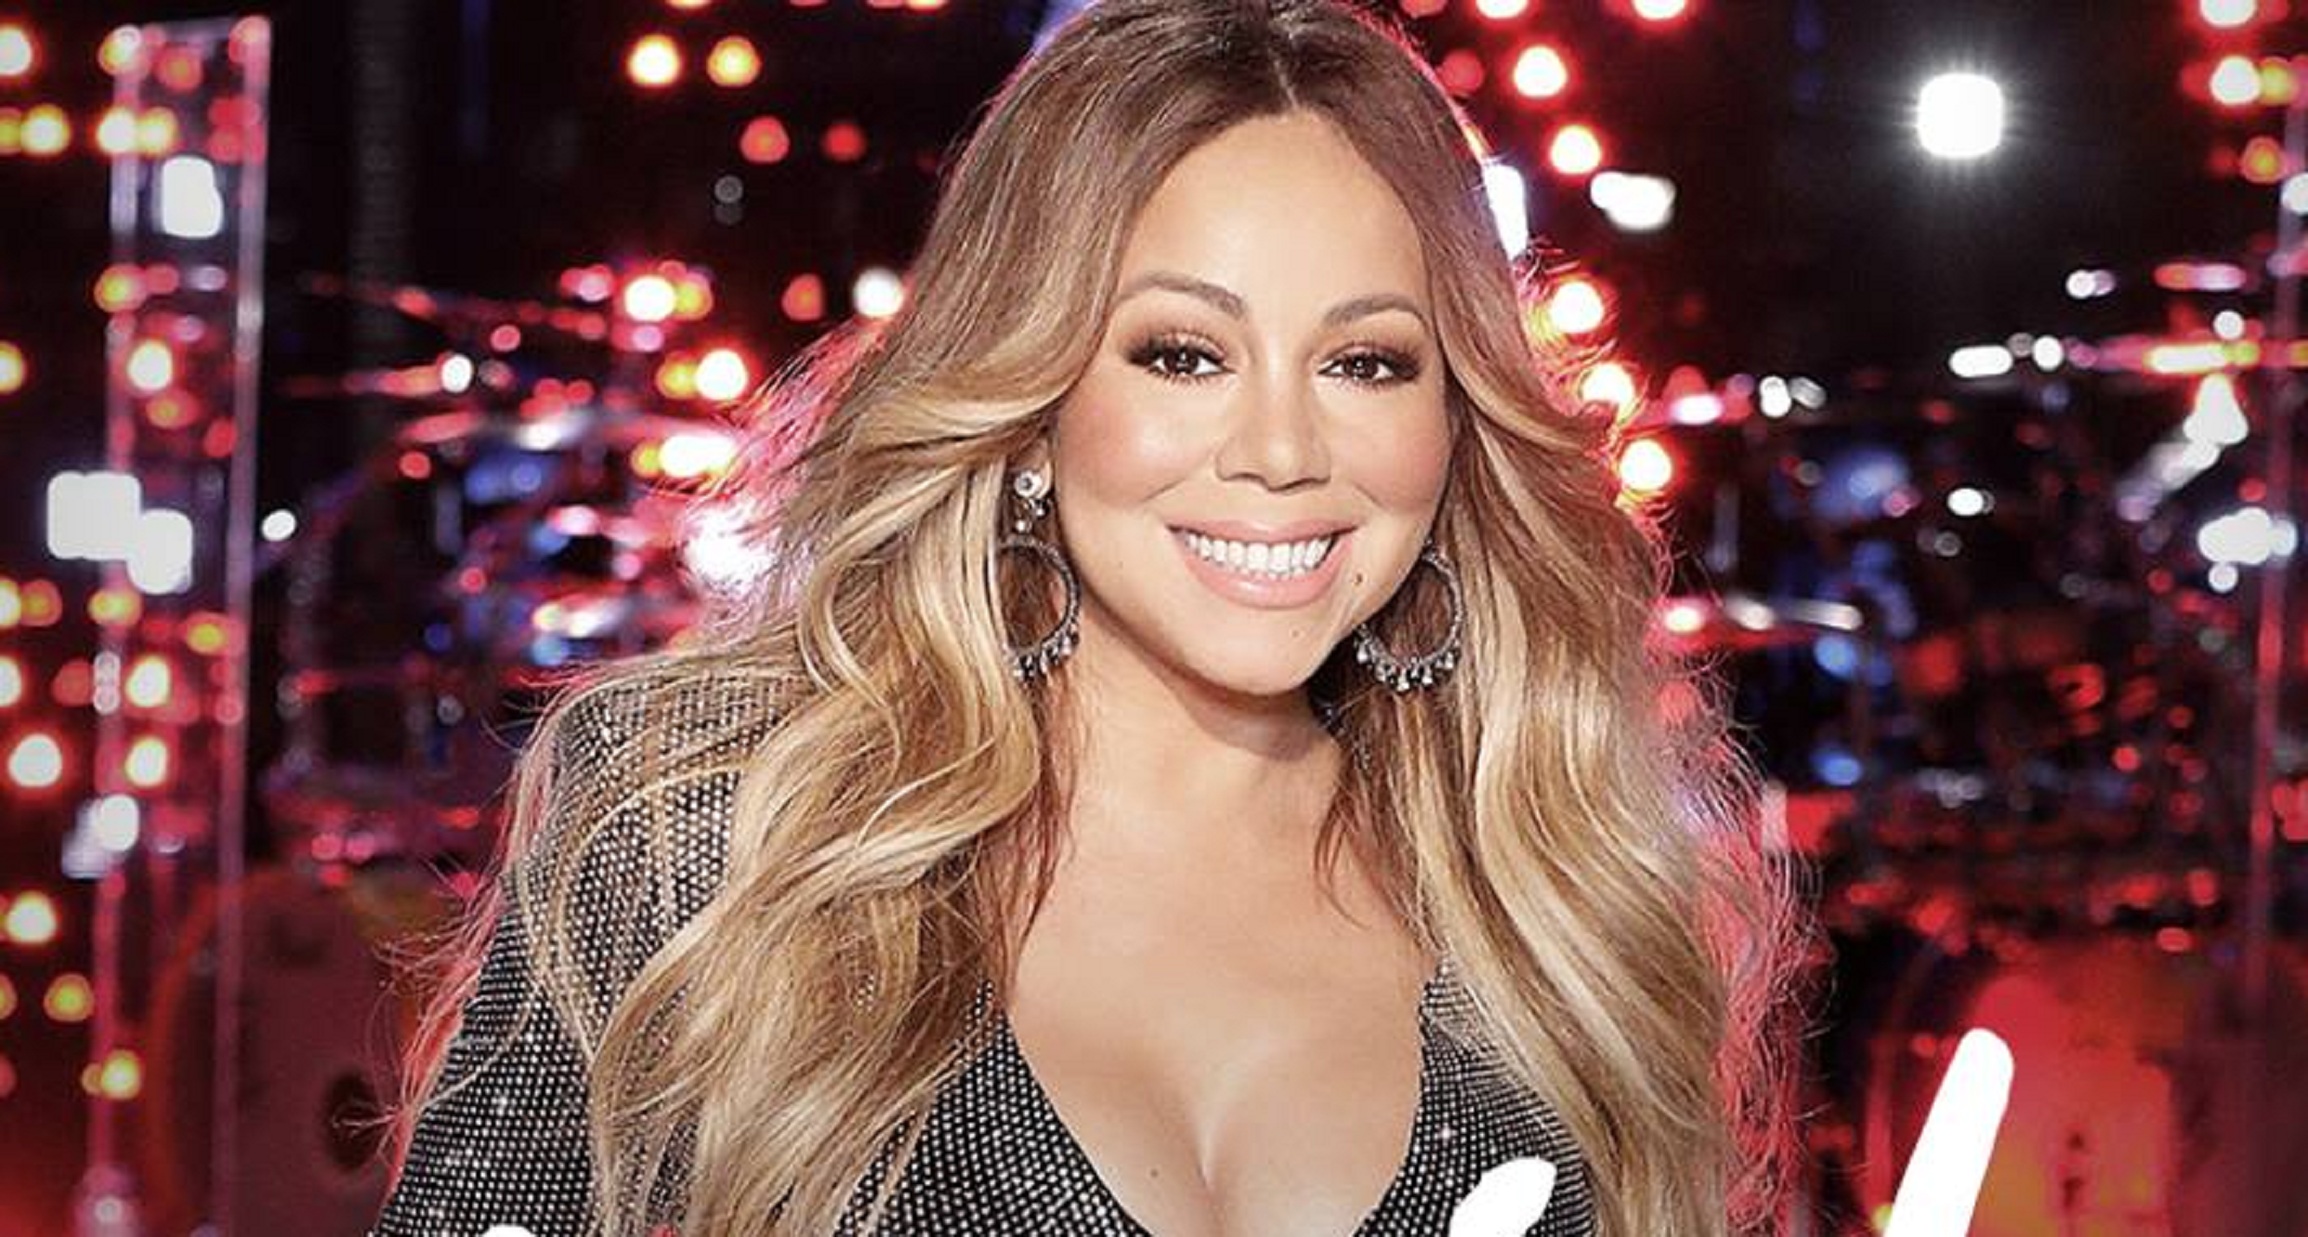 Mariah Carey To Appear on ‘The Voice’ as “Key Advisor”